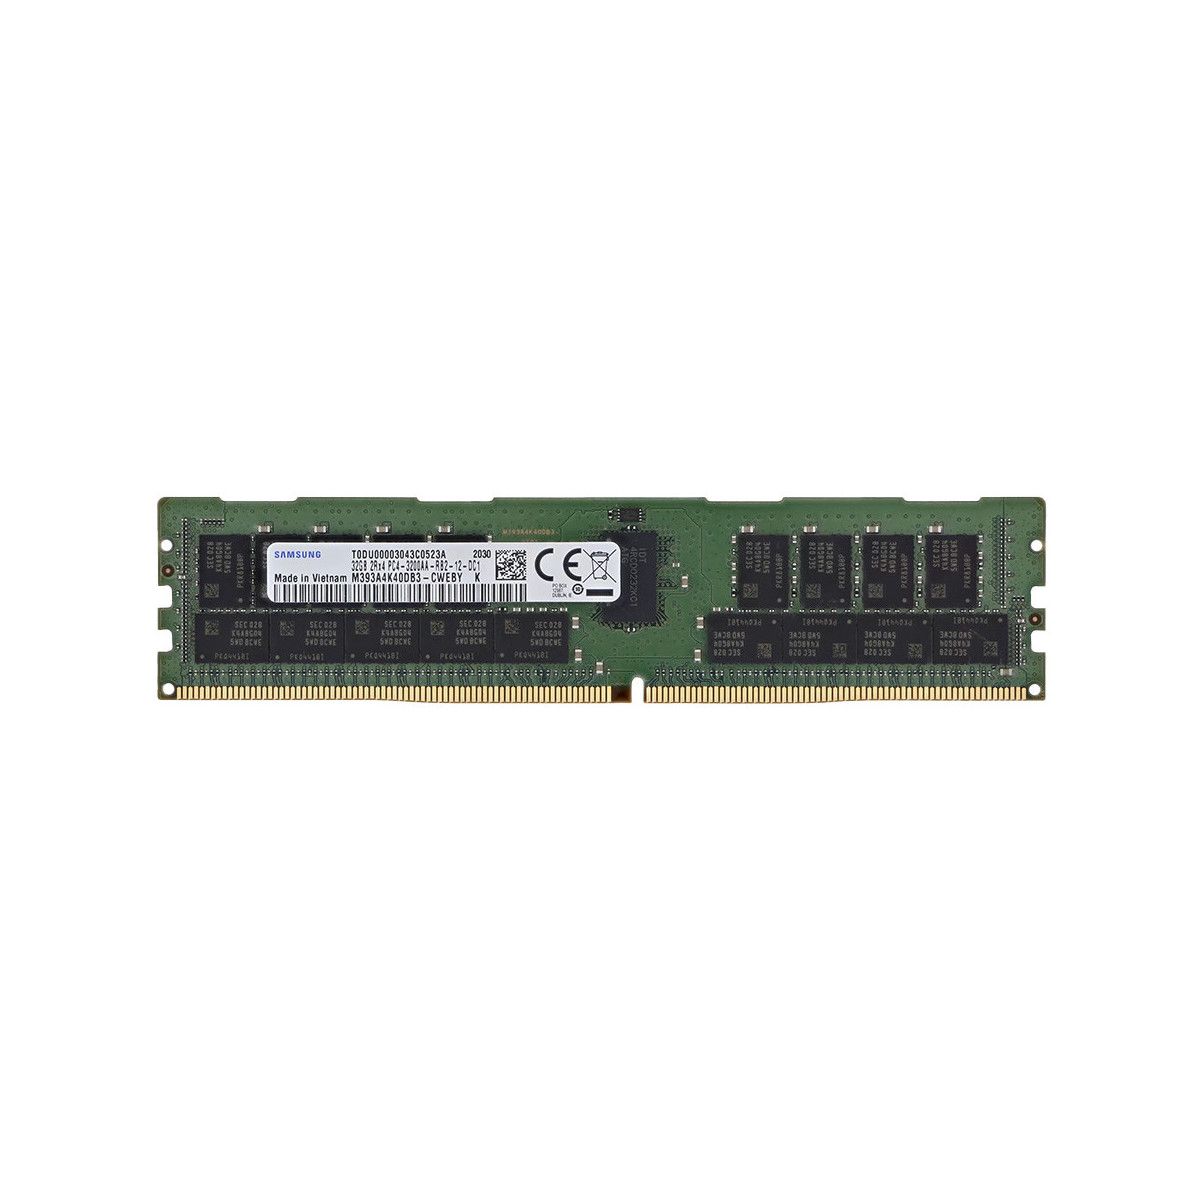 P06033‐H21-MS - Memstar 1x 32GB DDR4-3200 RDIMM PC4-25600R - Mem-star Memorie OEM compatibilă 1 - Memstar 